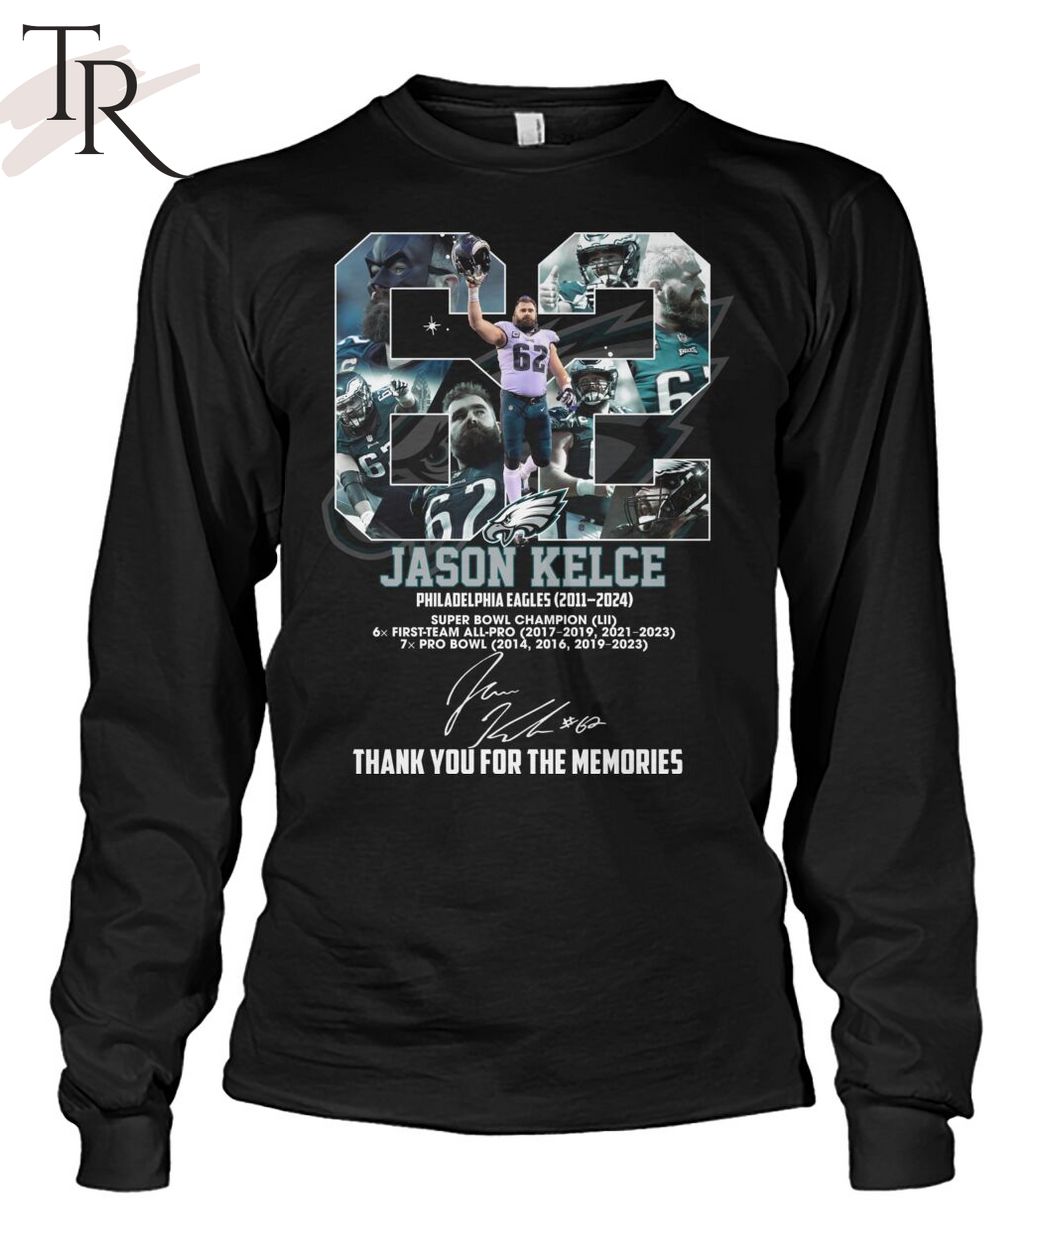 Philadelphia Eagles 2011 - 2024 Jason Kelce Thank You For The Memories T-Shirt